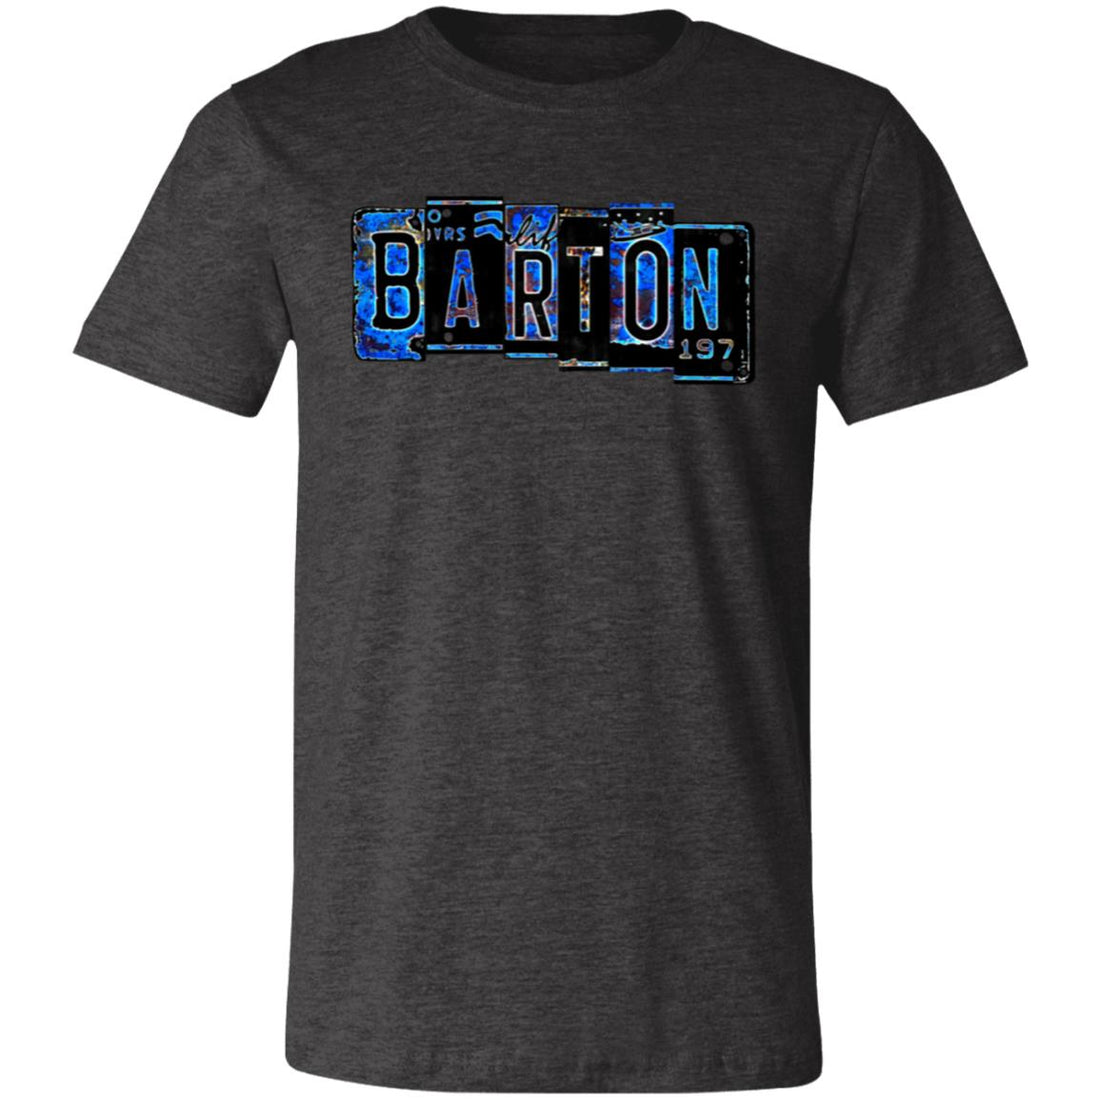 Barton Plates Short-Sleeve T-Shirt - T-Shirts - Positively Sassy - Barton Plates Short-Sleeve T-Shirt